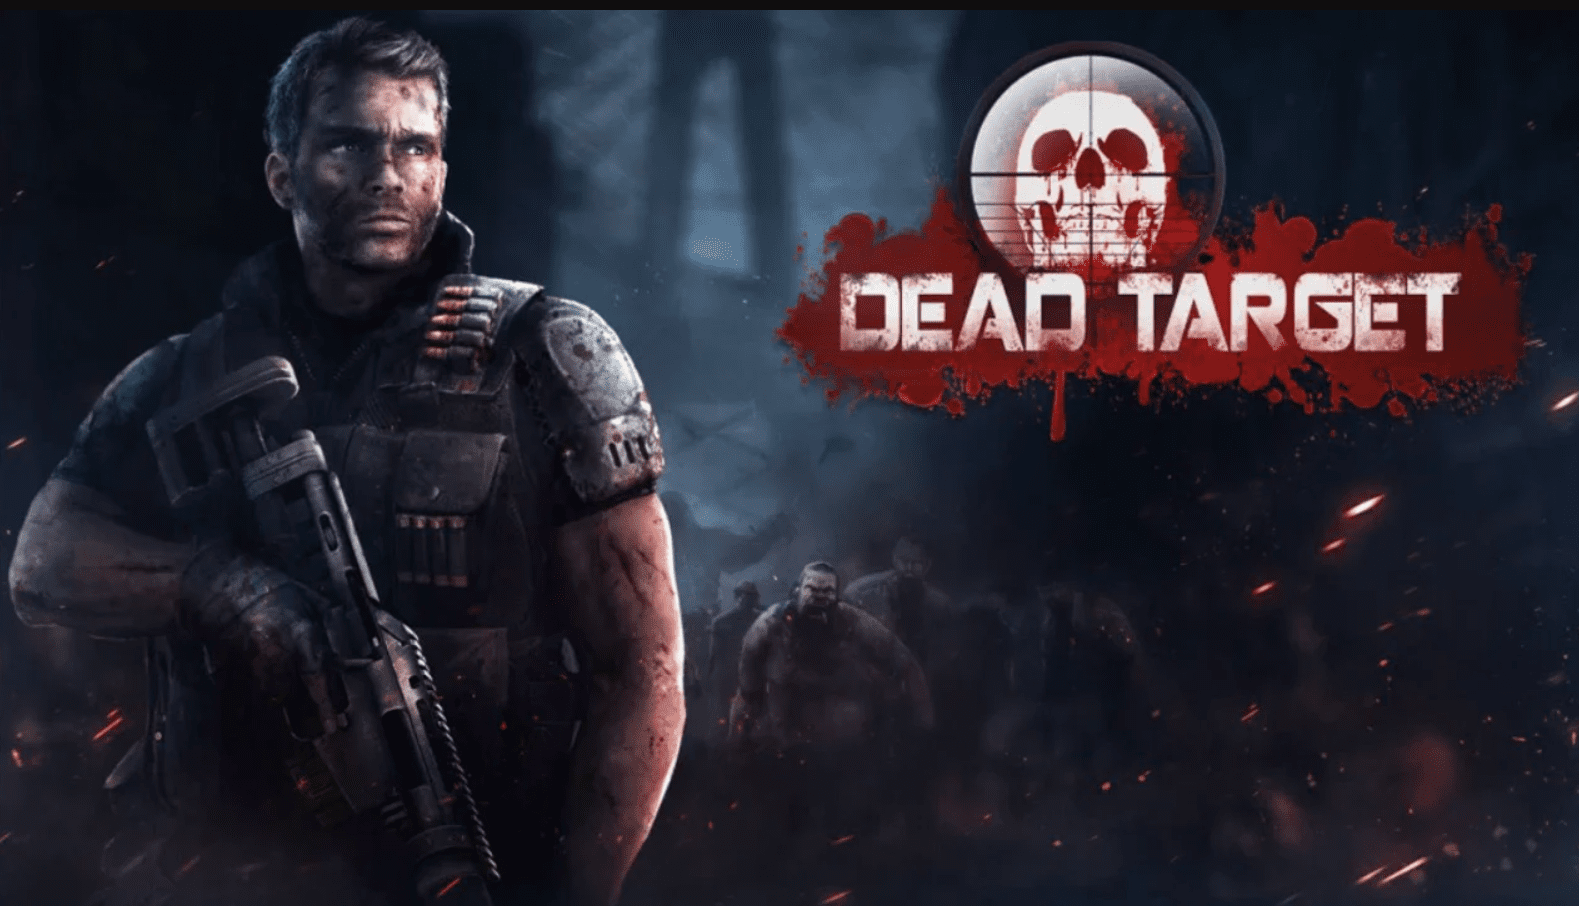 DEAD TARGET: Zombie Games 3D